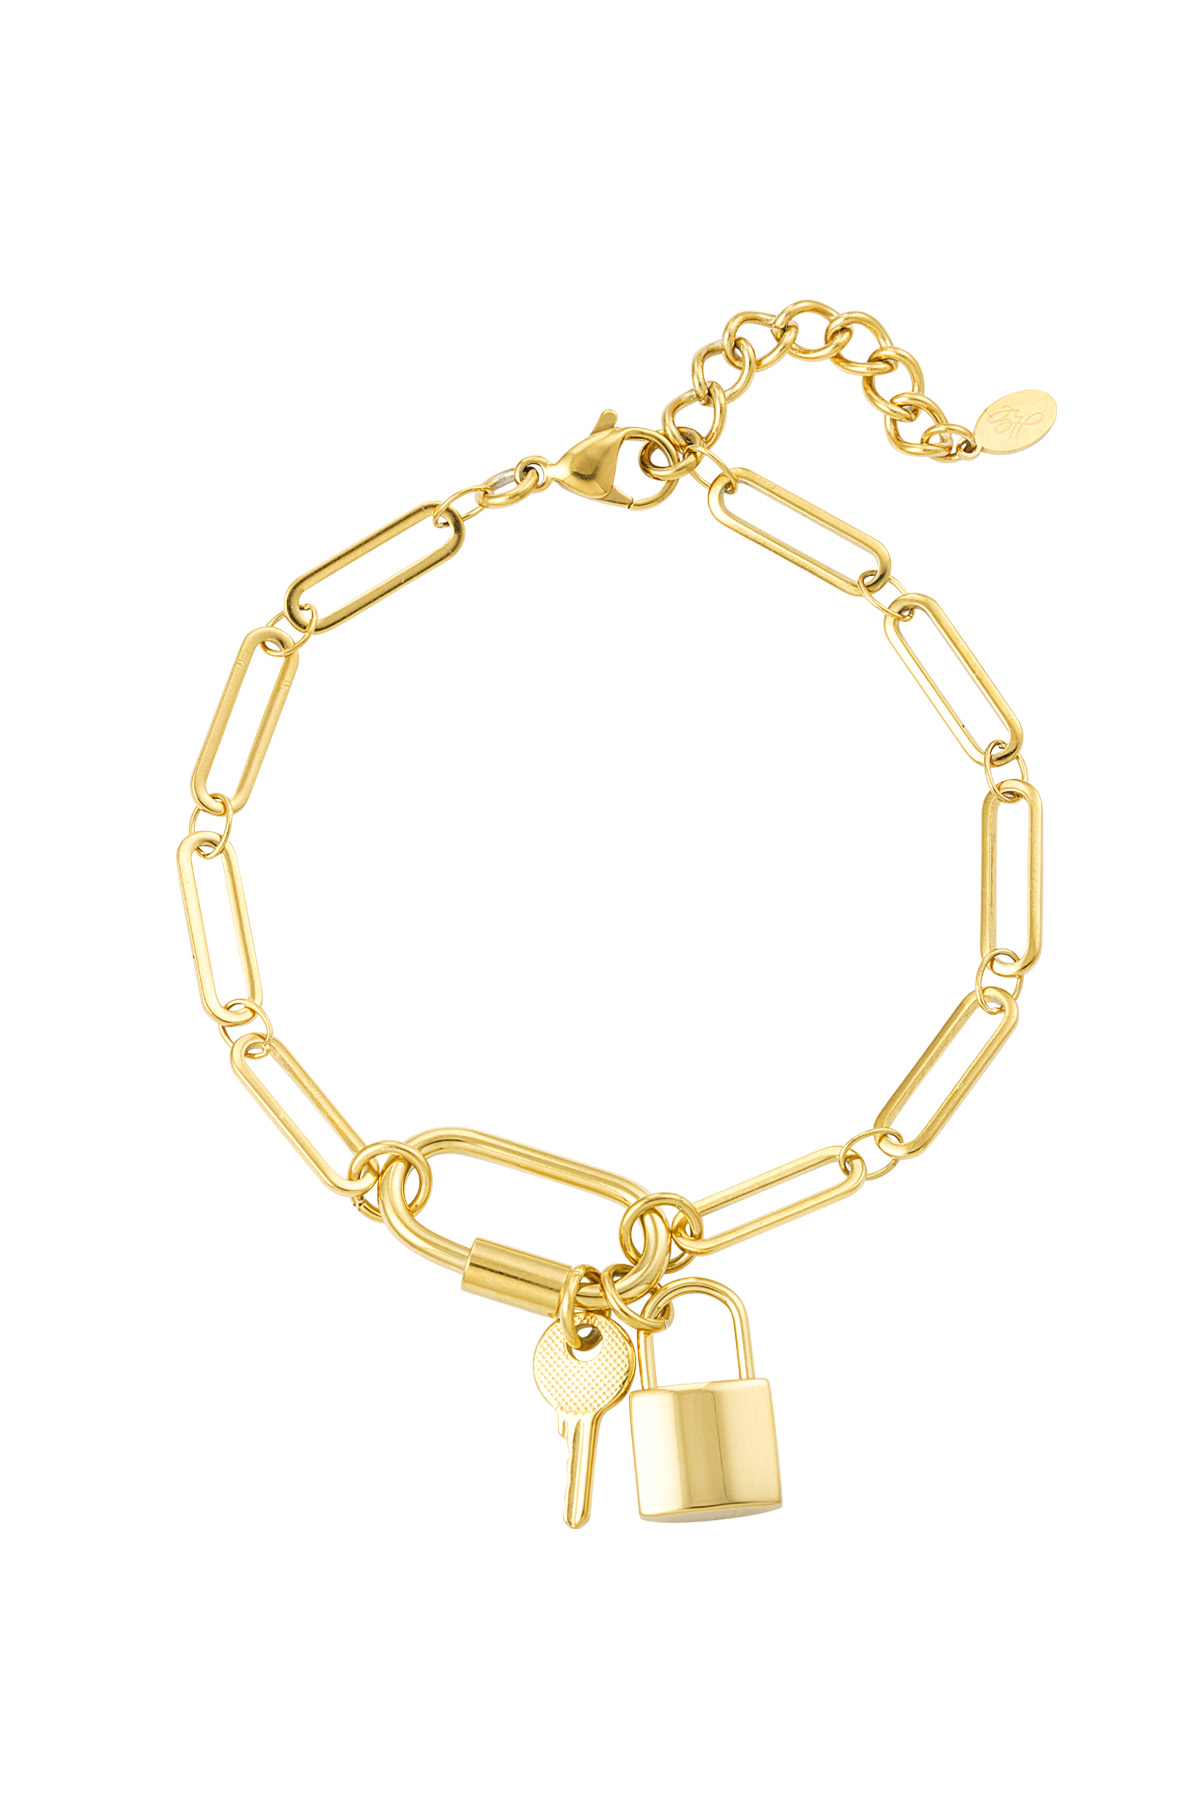 Bracelet links key & lock - gold h5 